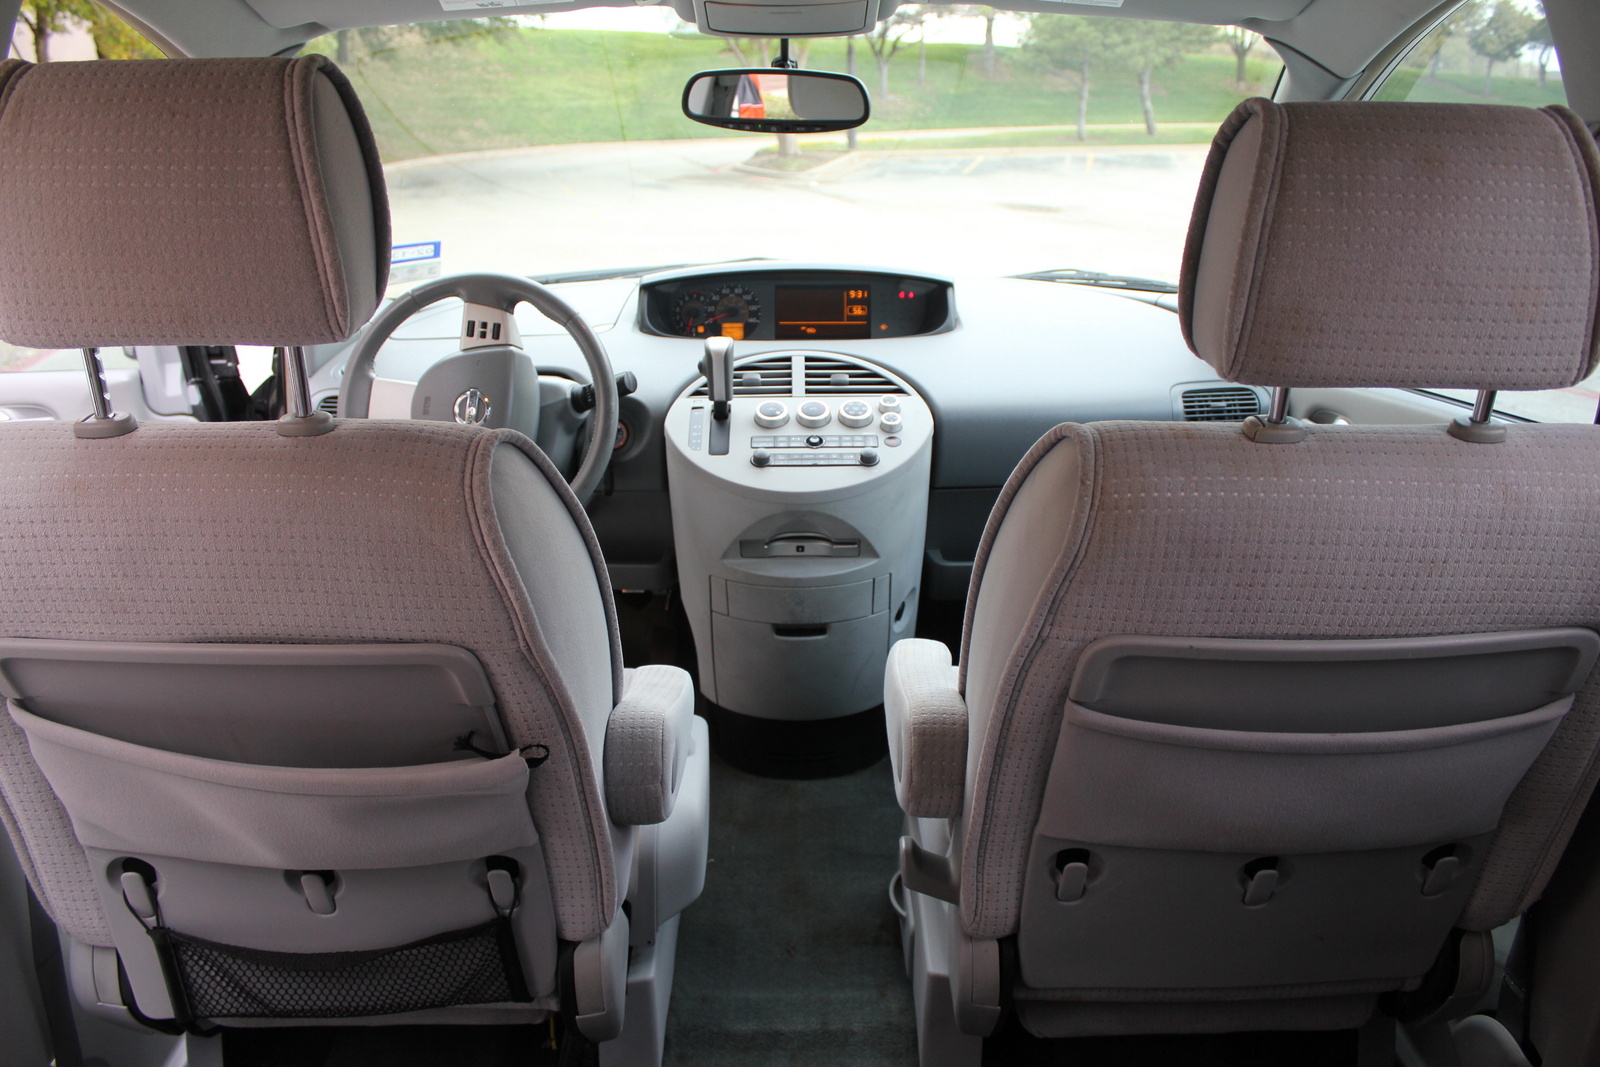 Nissan Quest 2008 Interior